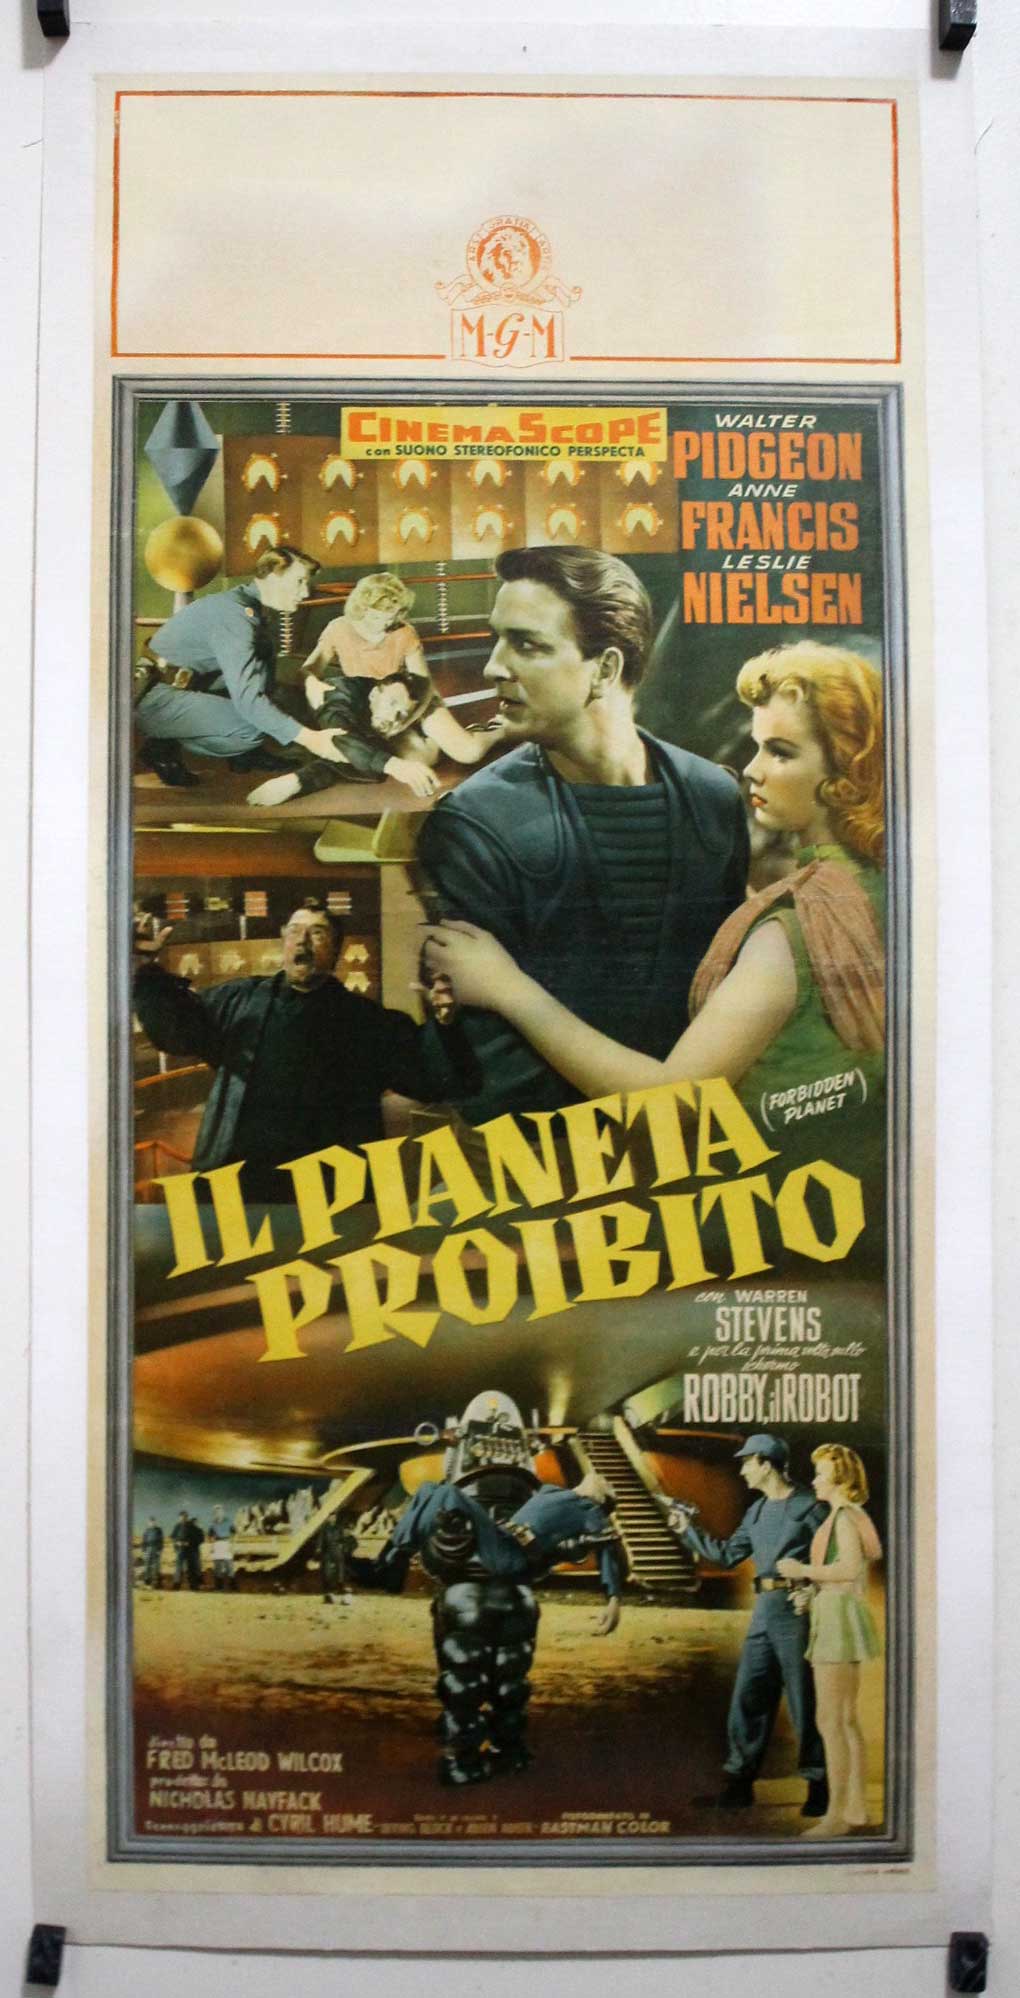 Original Poster Planète interdite-posterissim